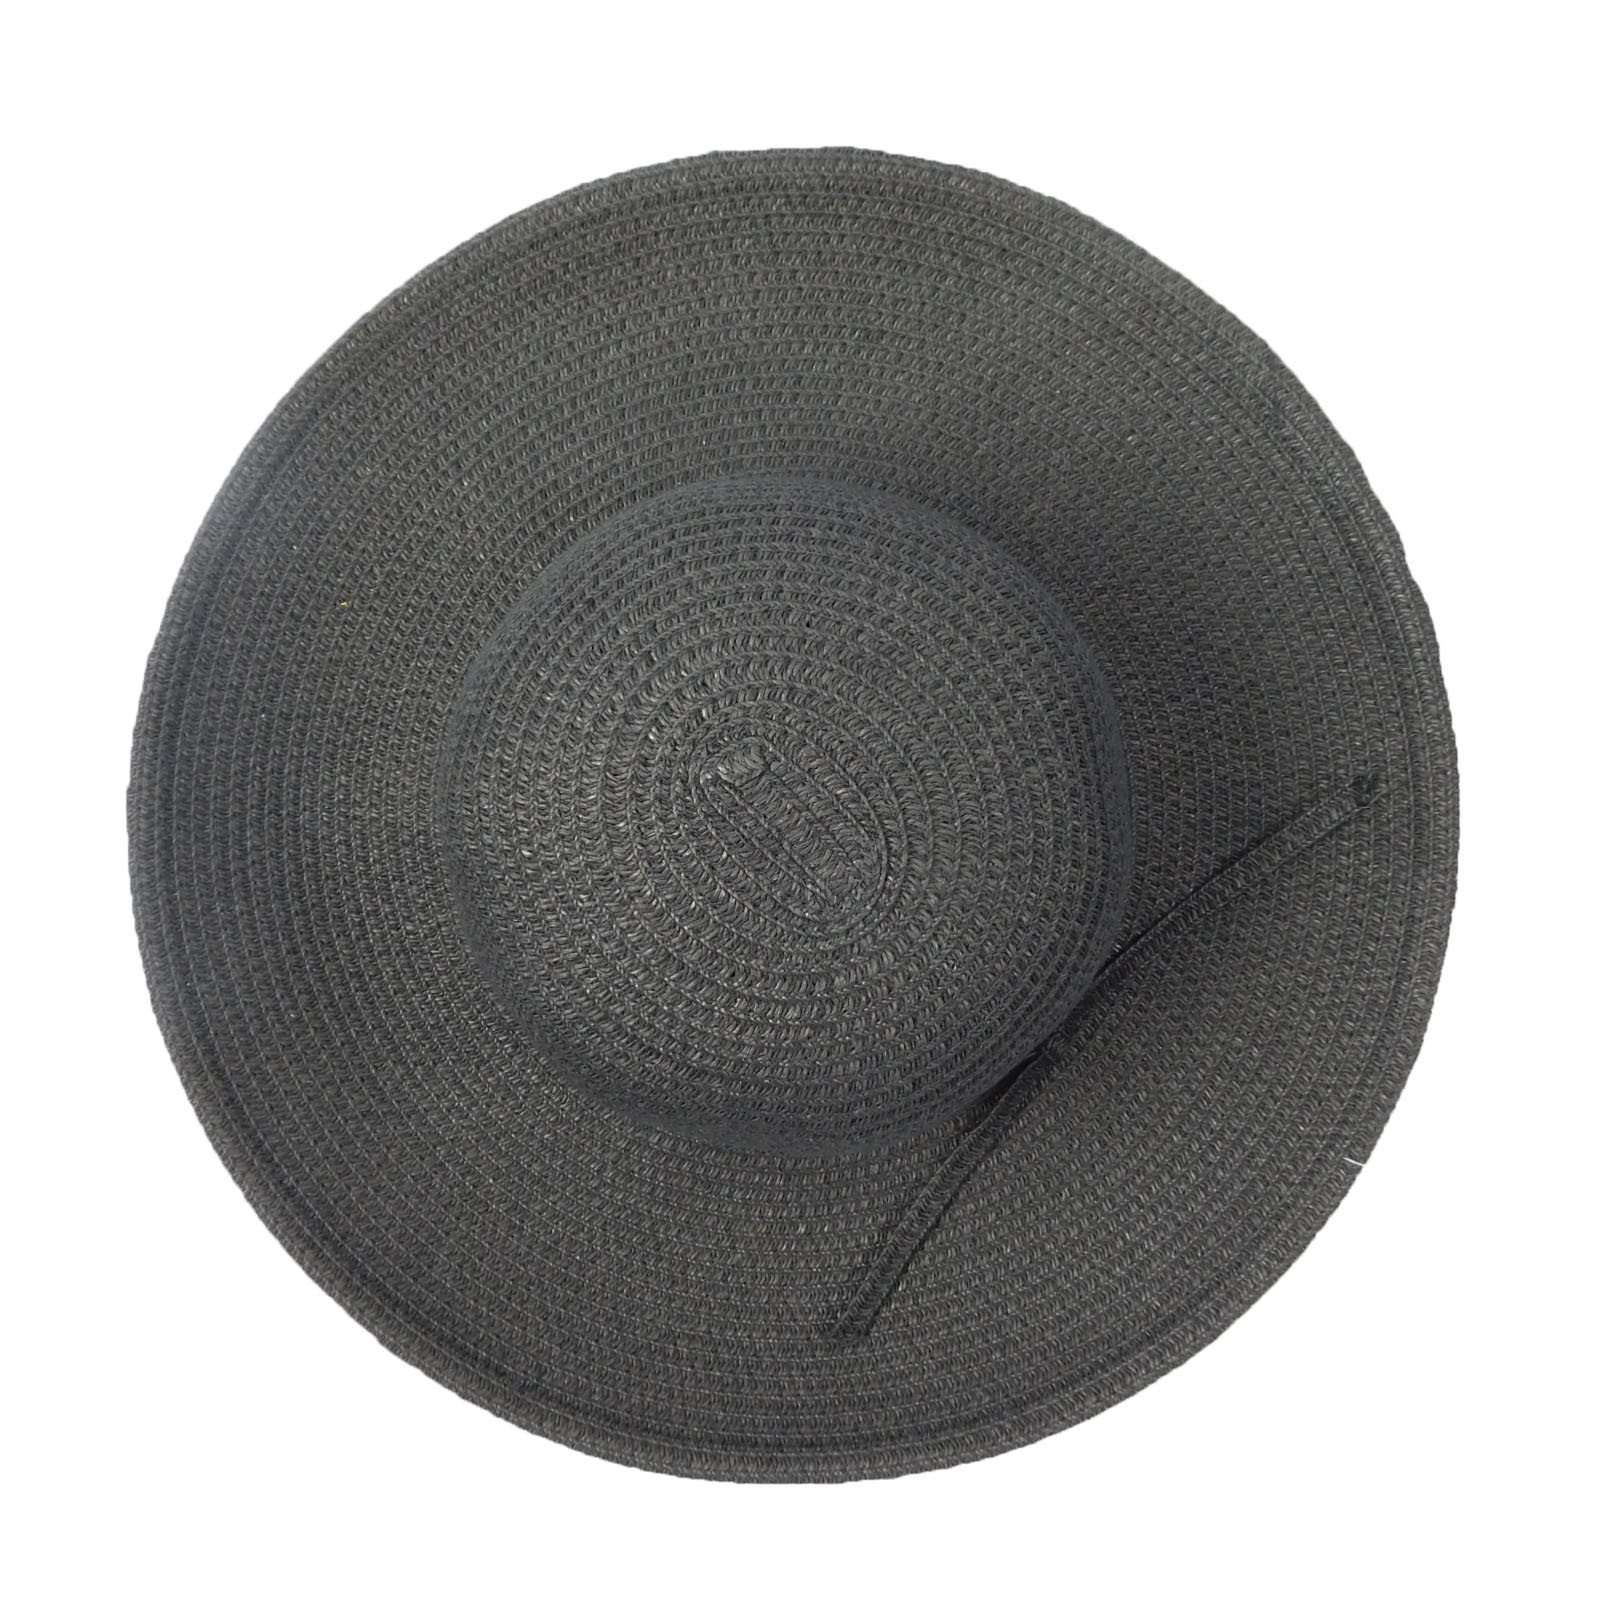 Sewn Braid Straw Wide Brim Sun Hat - JSA Wide Brim Sun Hat Jeanne Simmons WSPP586BK Black  